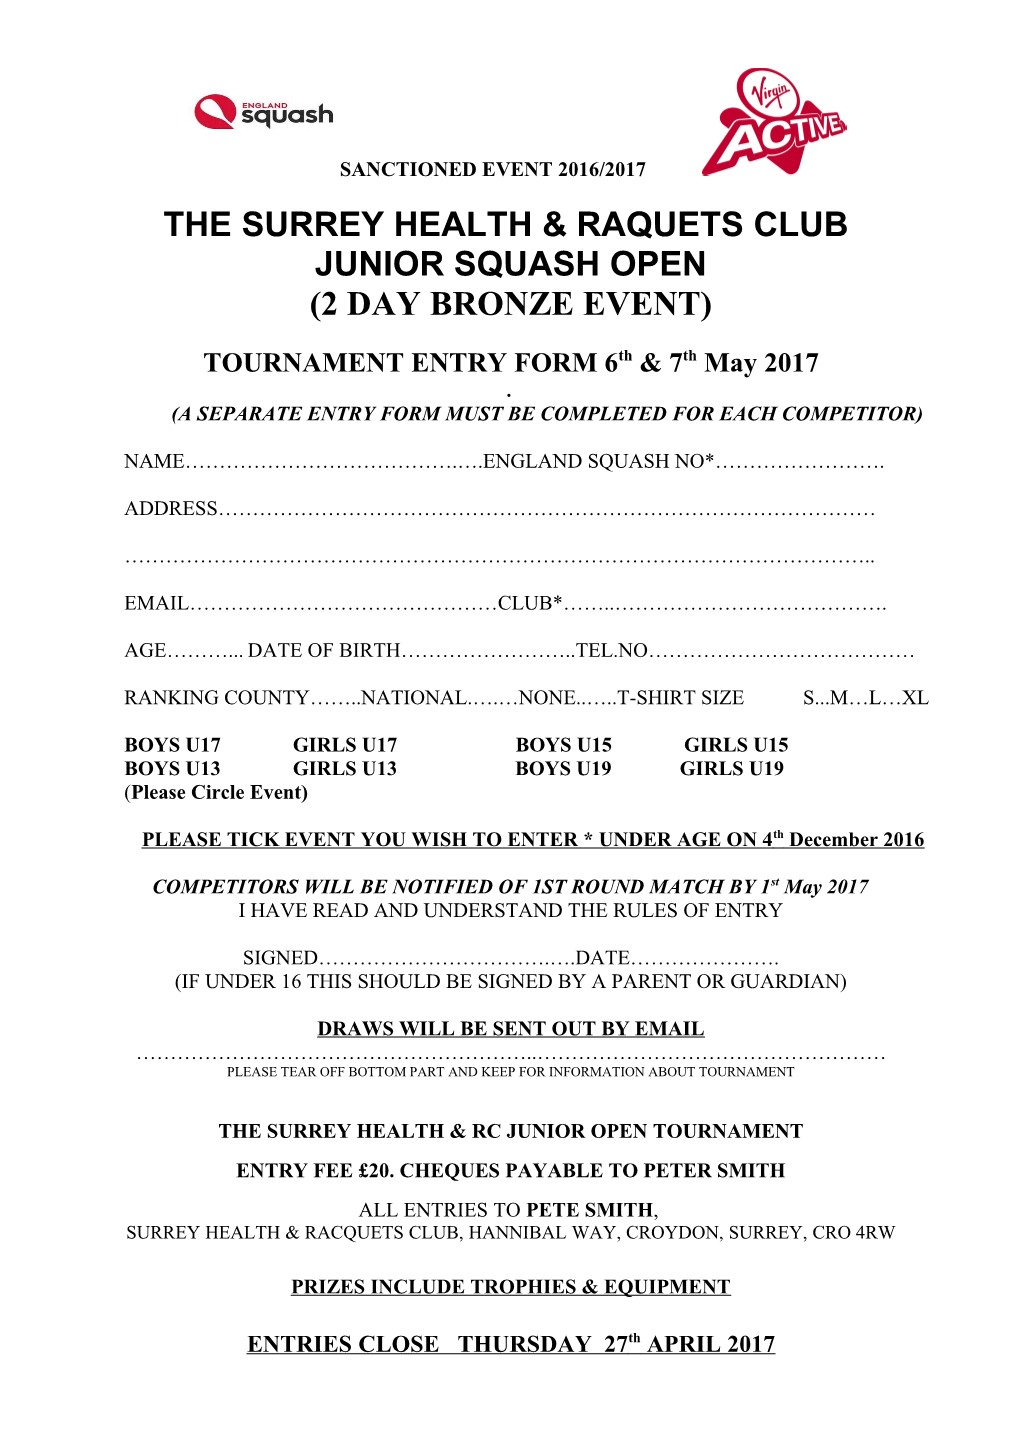 The Surrey Health & Raquets Club